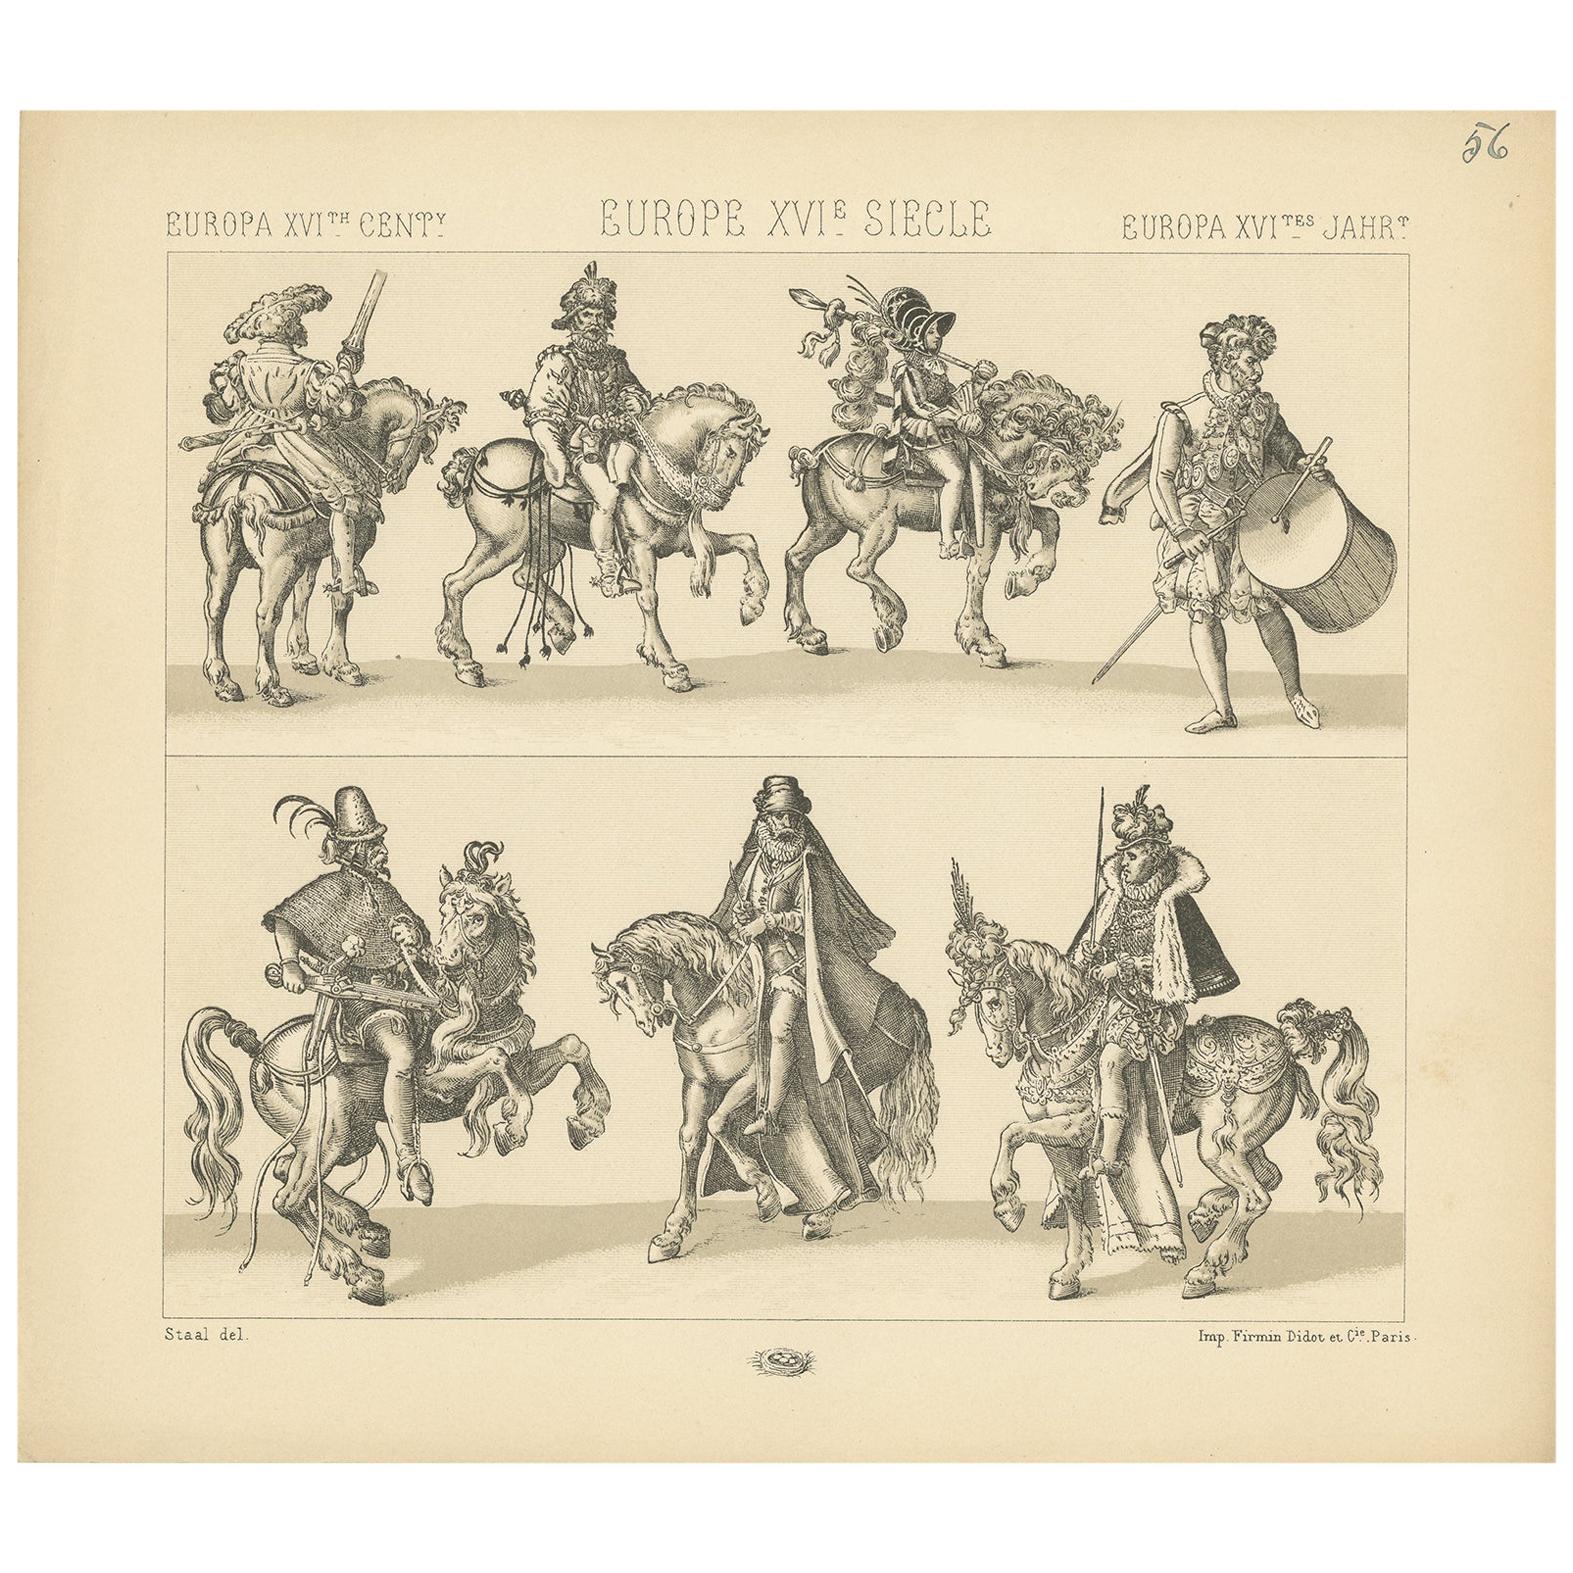 Pl 56 Antique Print of European 16th Century Battle Costumes by Racinet